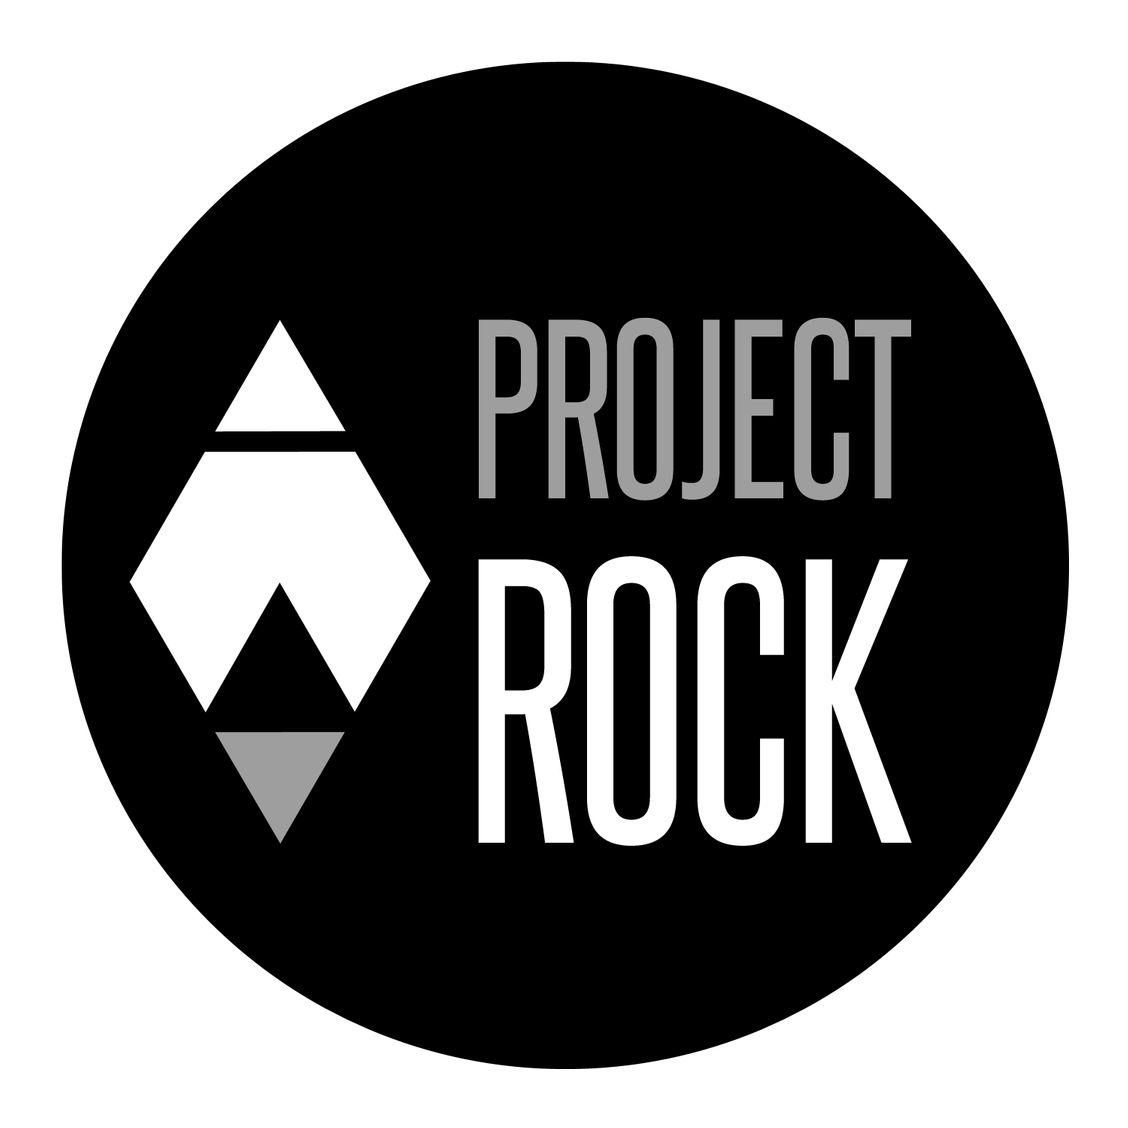 Project Rock Blogs